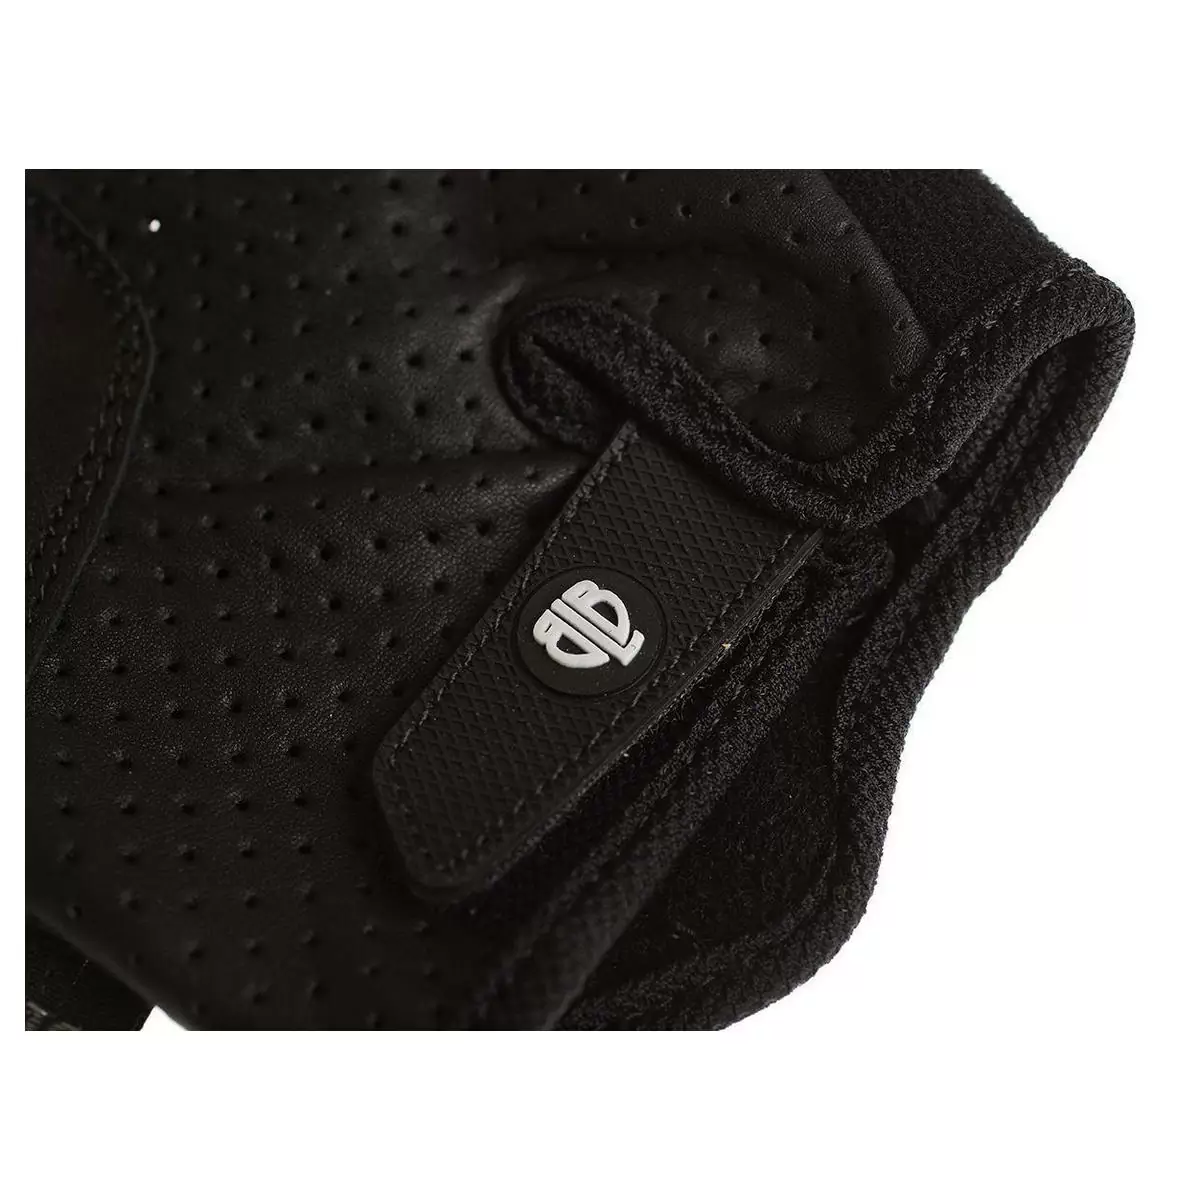 gants cuir classic sport taille xxl noir #5